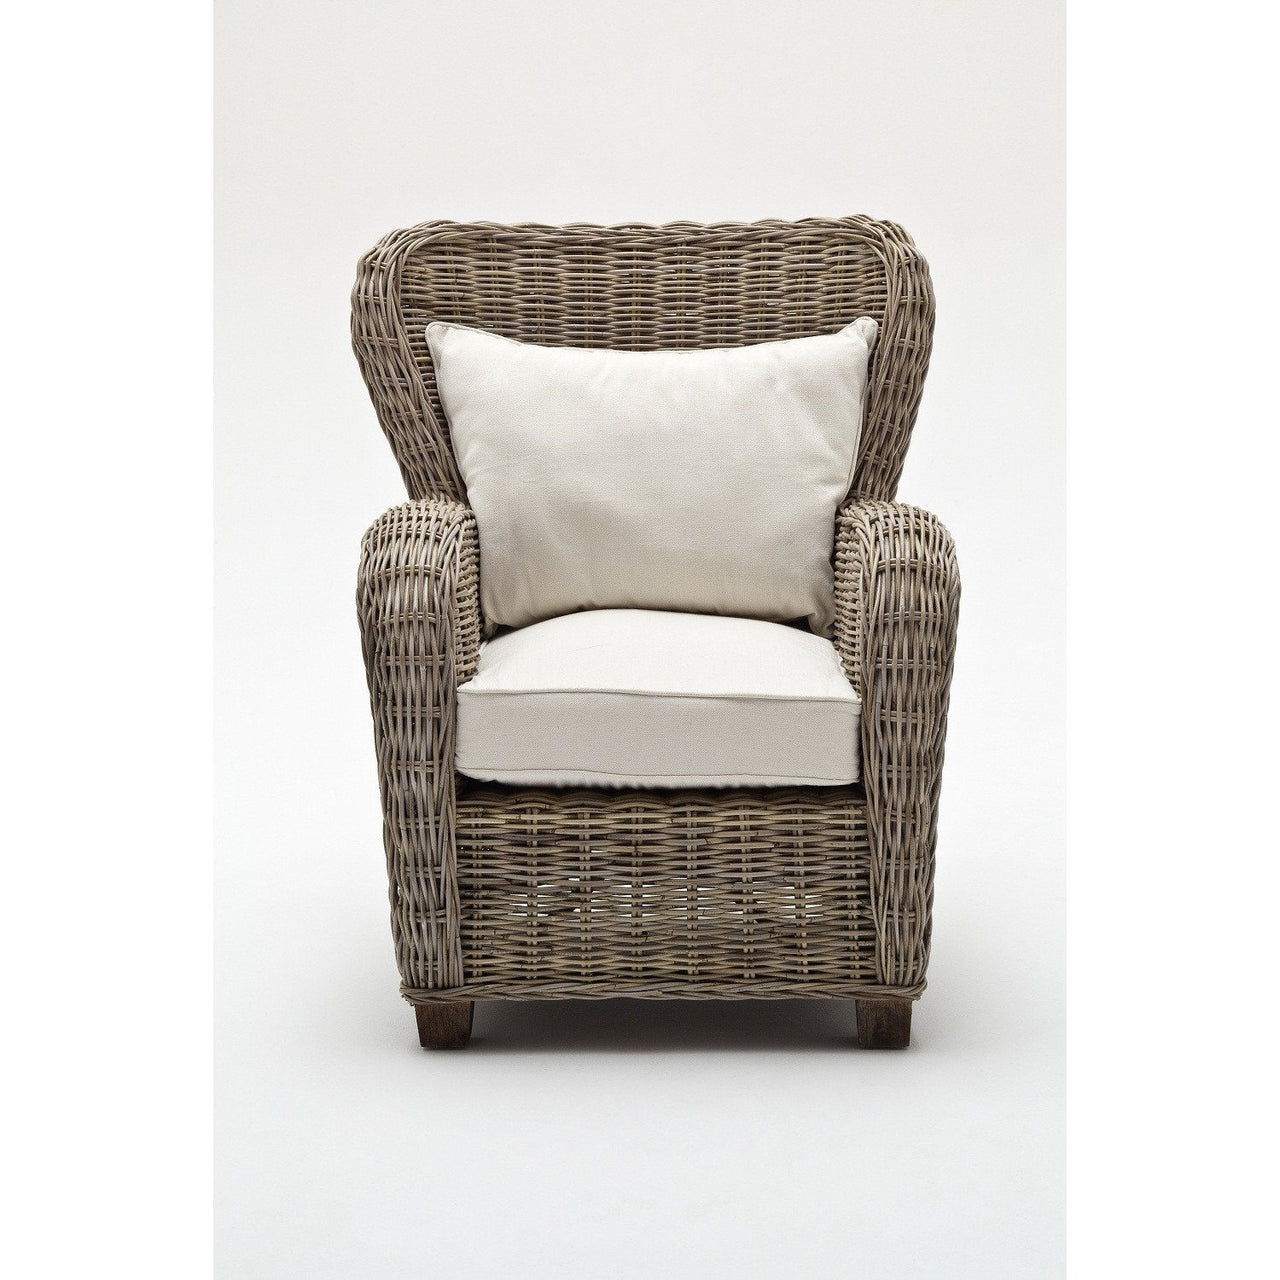 NovaSolo Wickerworks CR42 Queen Chair with seat & back cushions Chair NovaSolo 